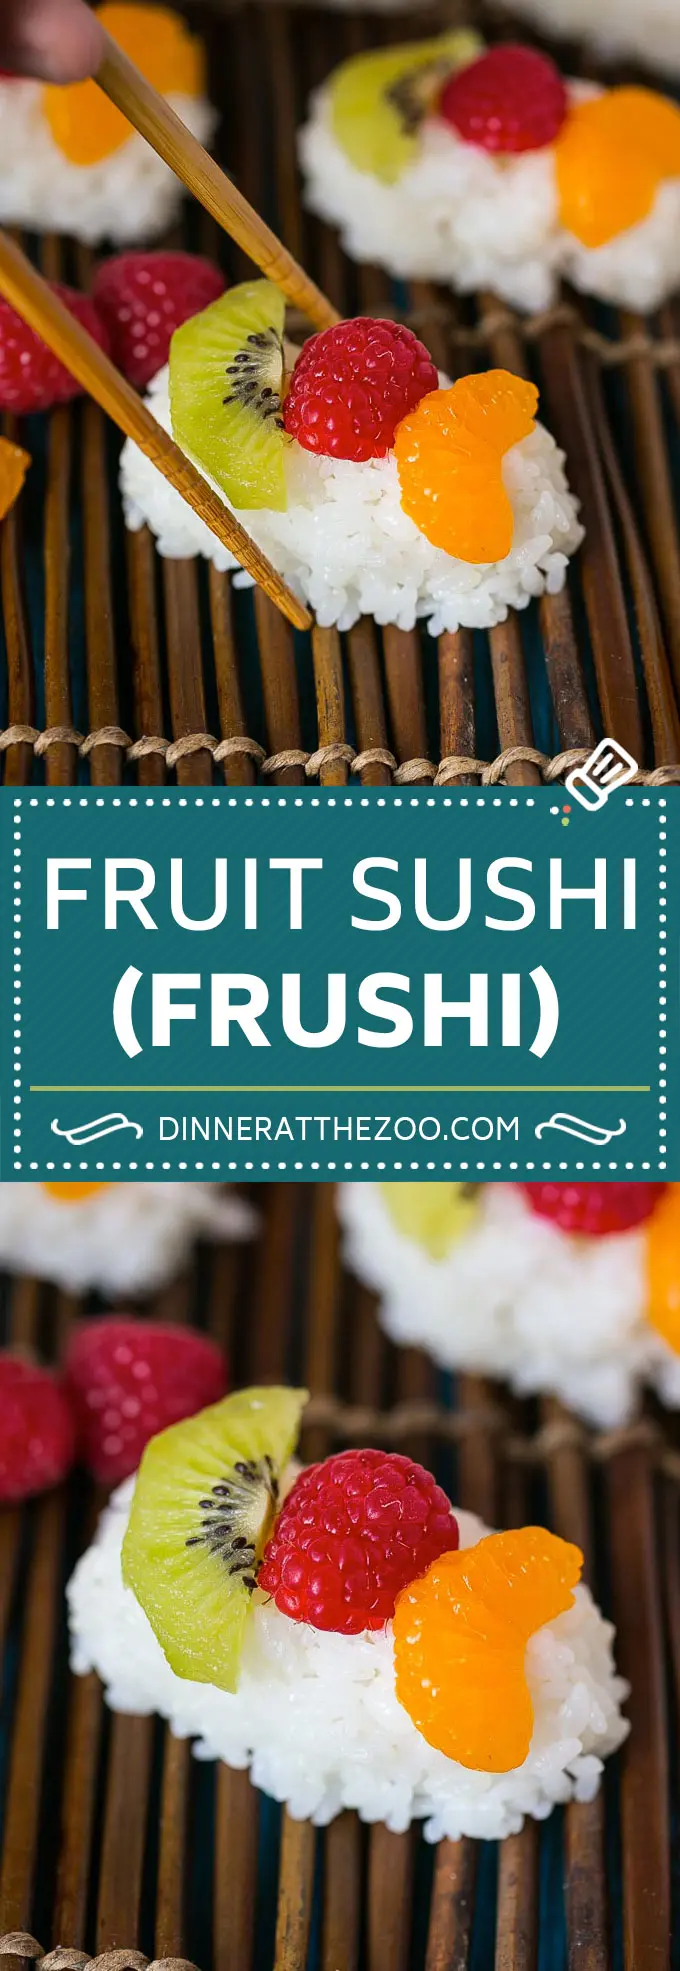 Receta de sushi de fruta | Sushi de postre #fruta #sushi #snack #dessert #dinneratthezoo